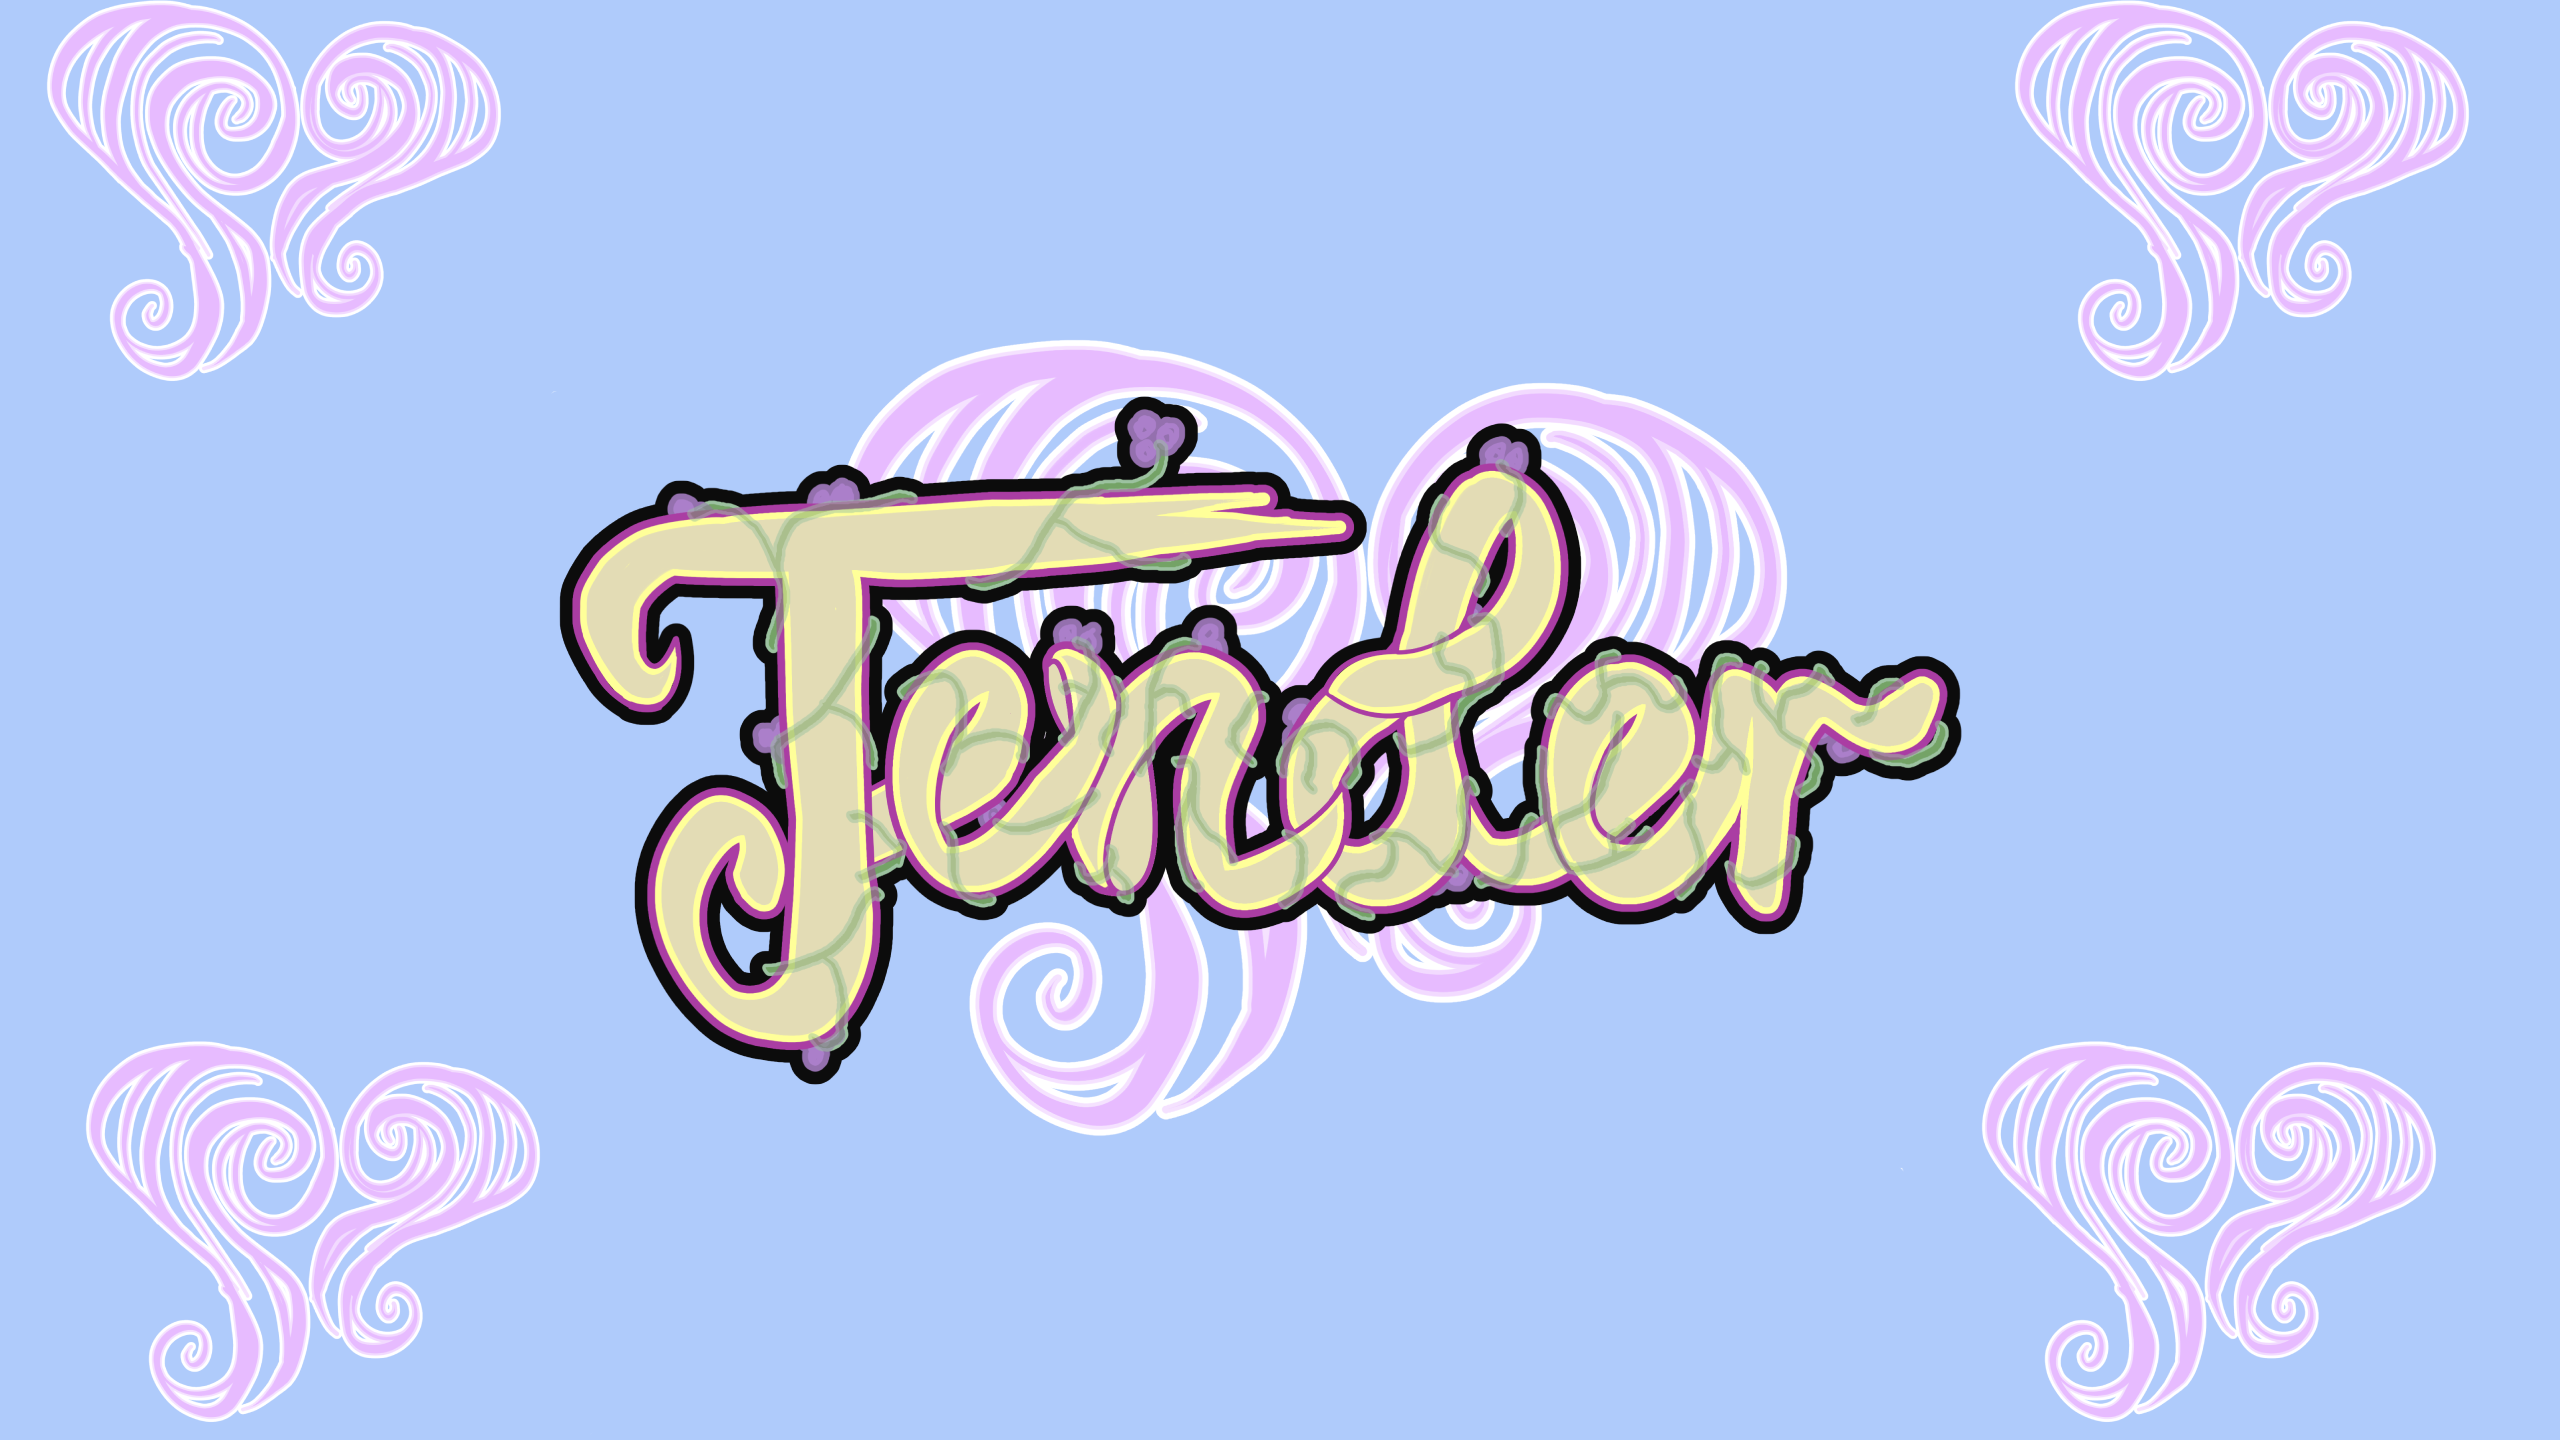 Tender